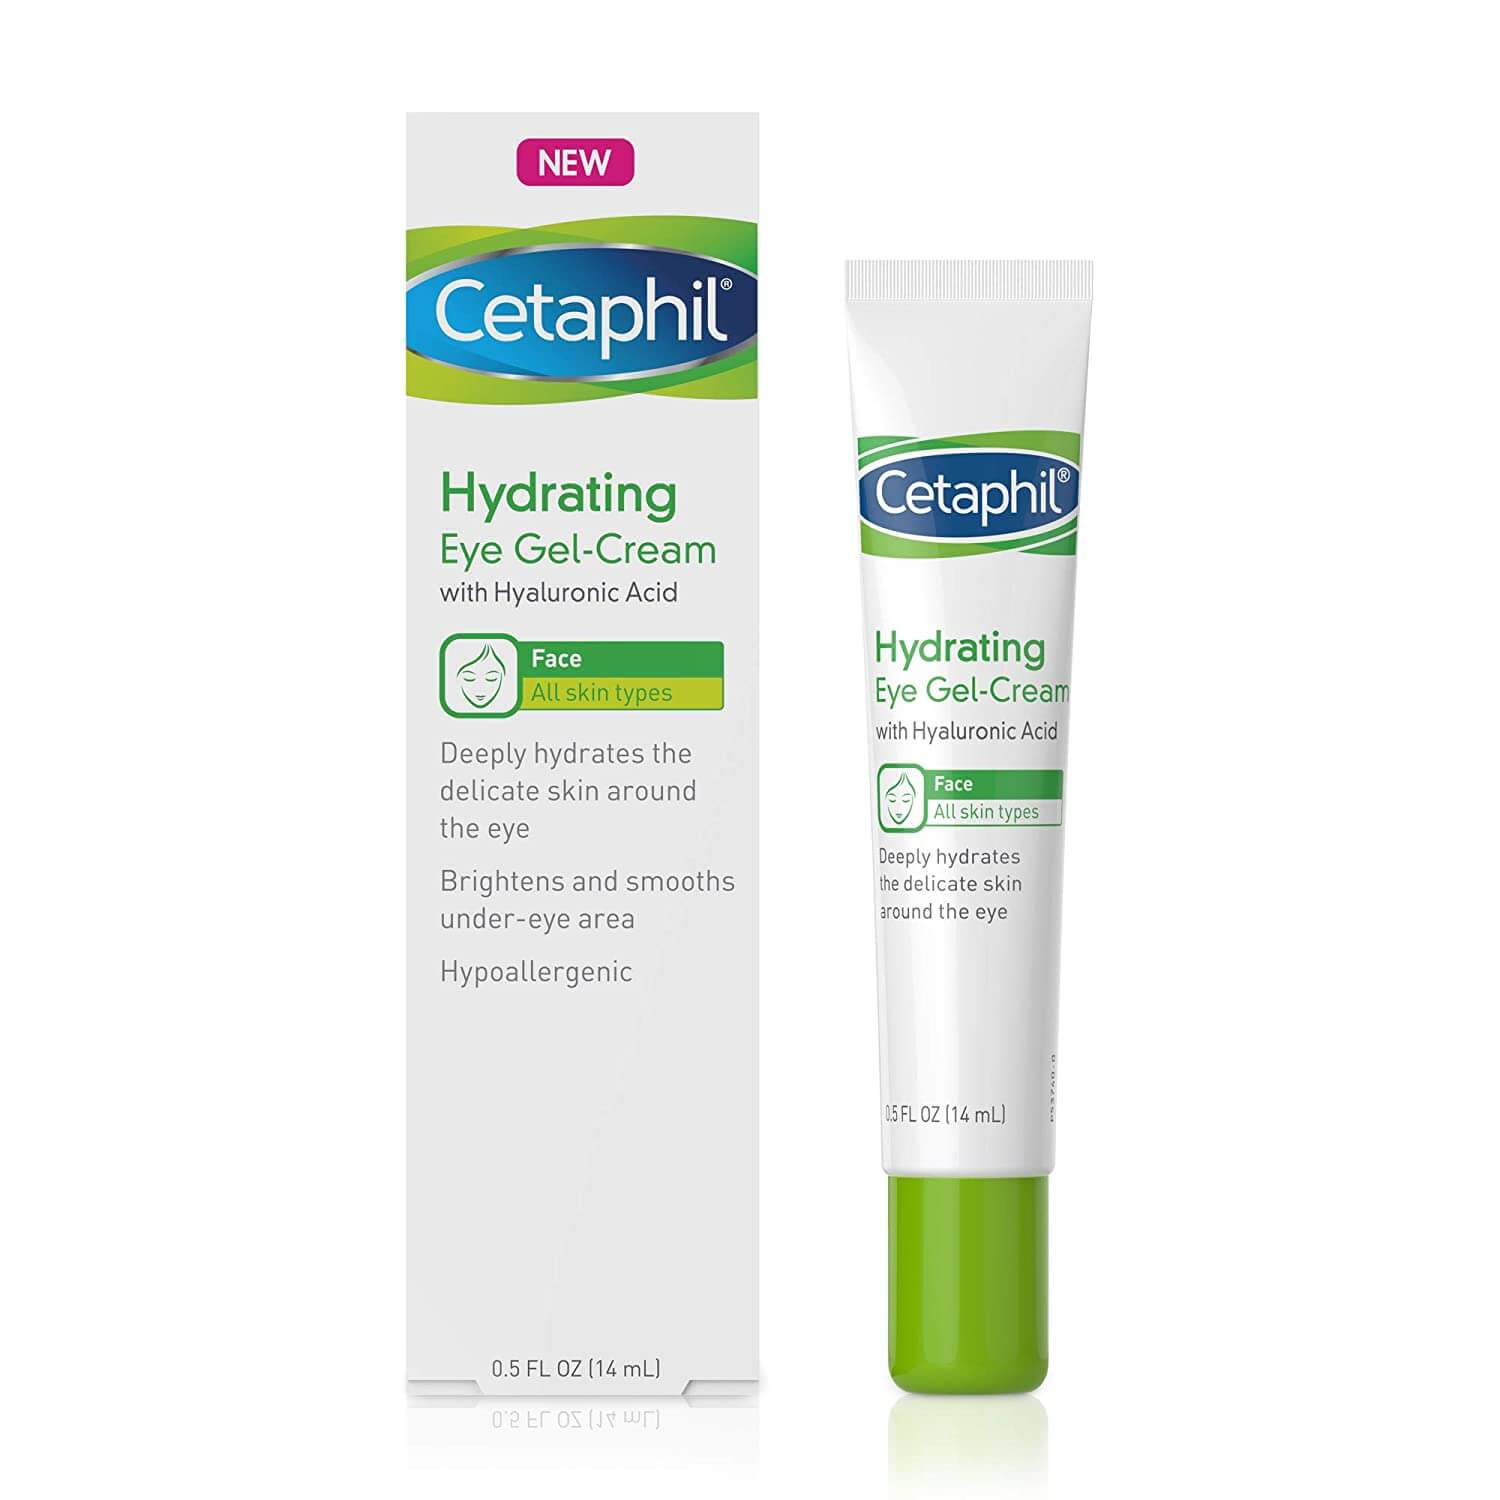 cetaphil hydrating eye gel-cream reviews